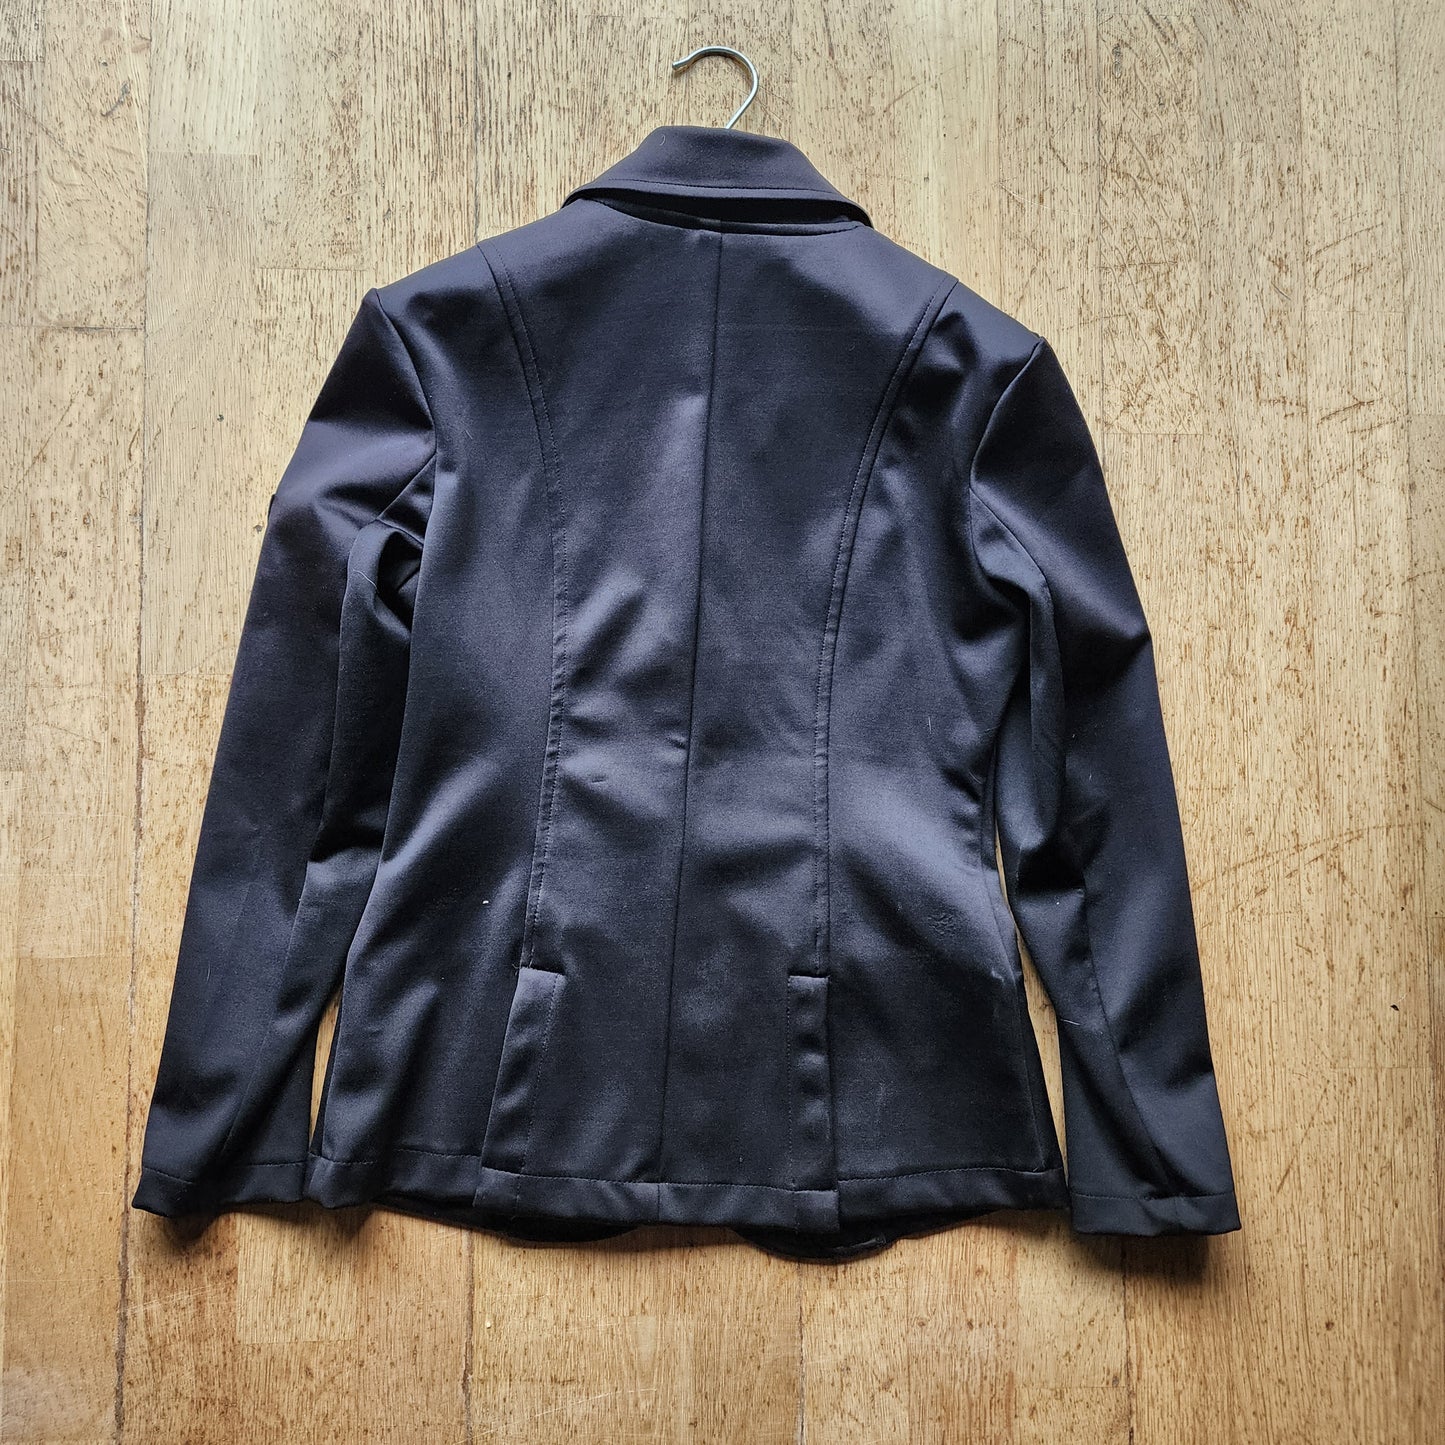 Covalliero girls black show jacket. Girls size 12 (140)